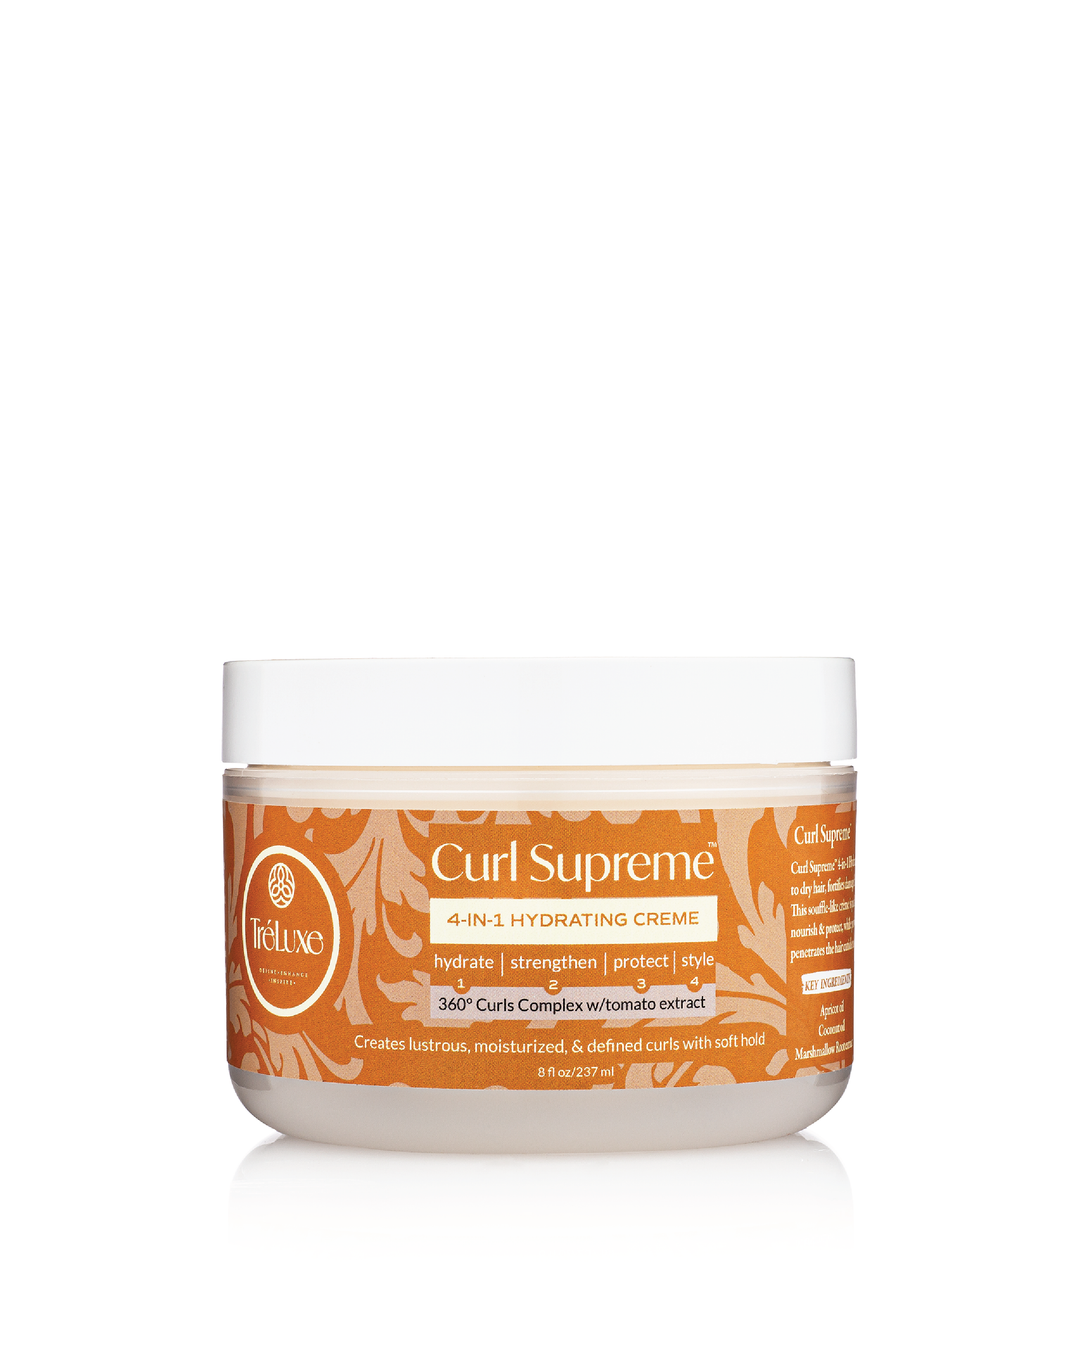 Treluxe Curl Supreme™ 4-in-1 Hydrating Crème